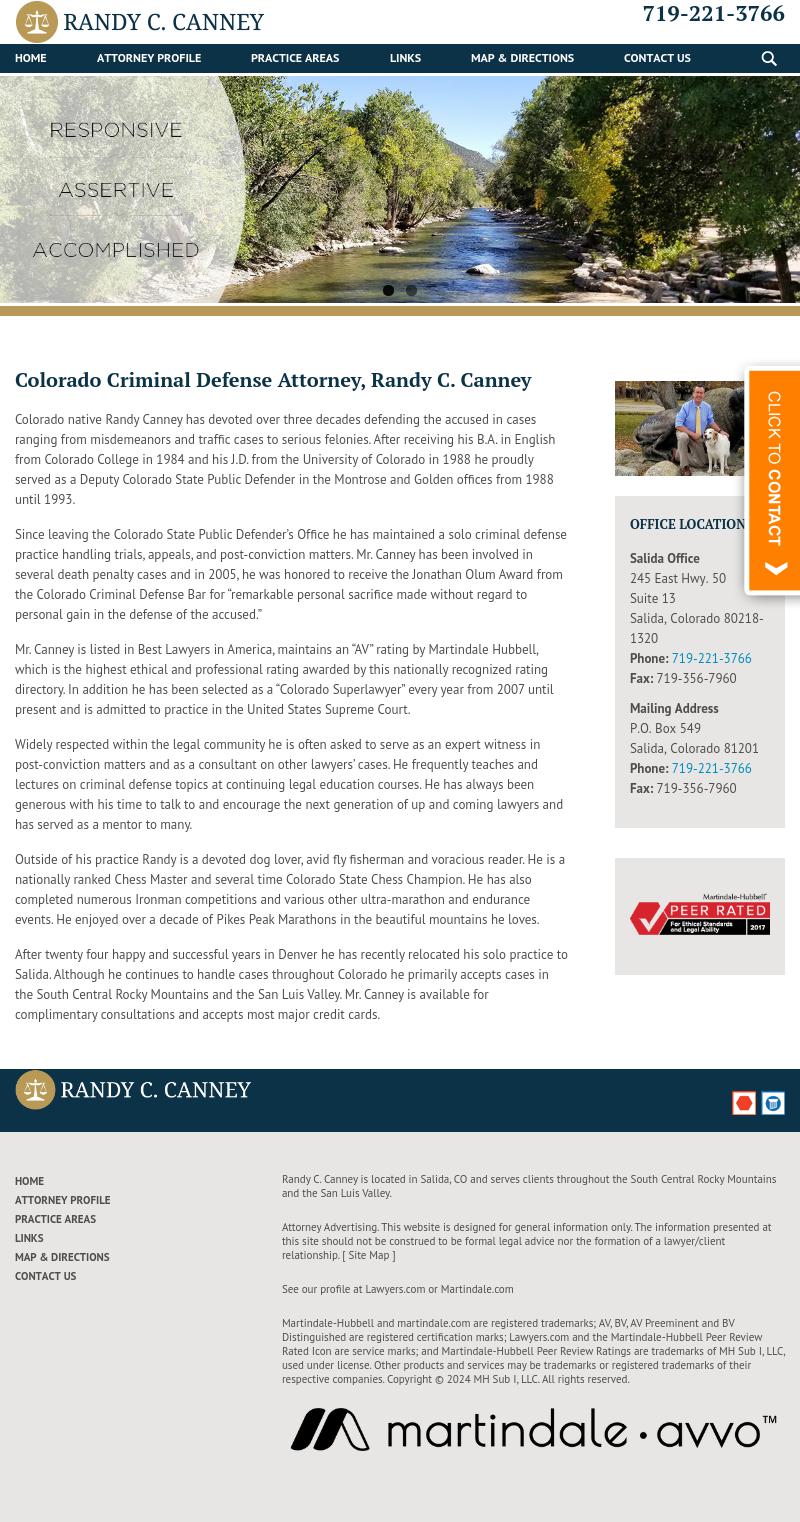 Randy C. Canney - Denver CO Lawyers